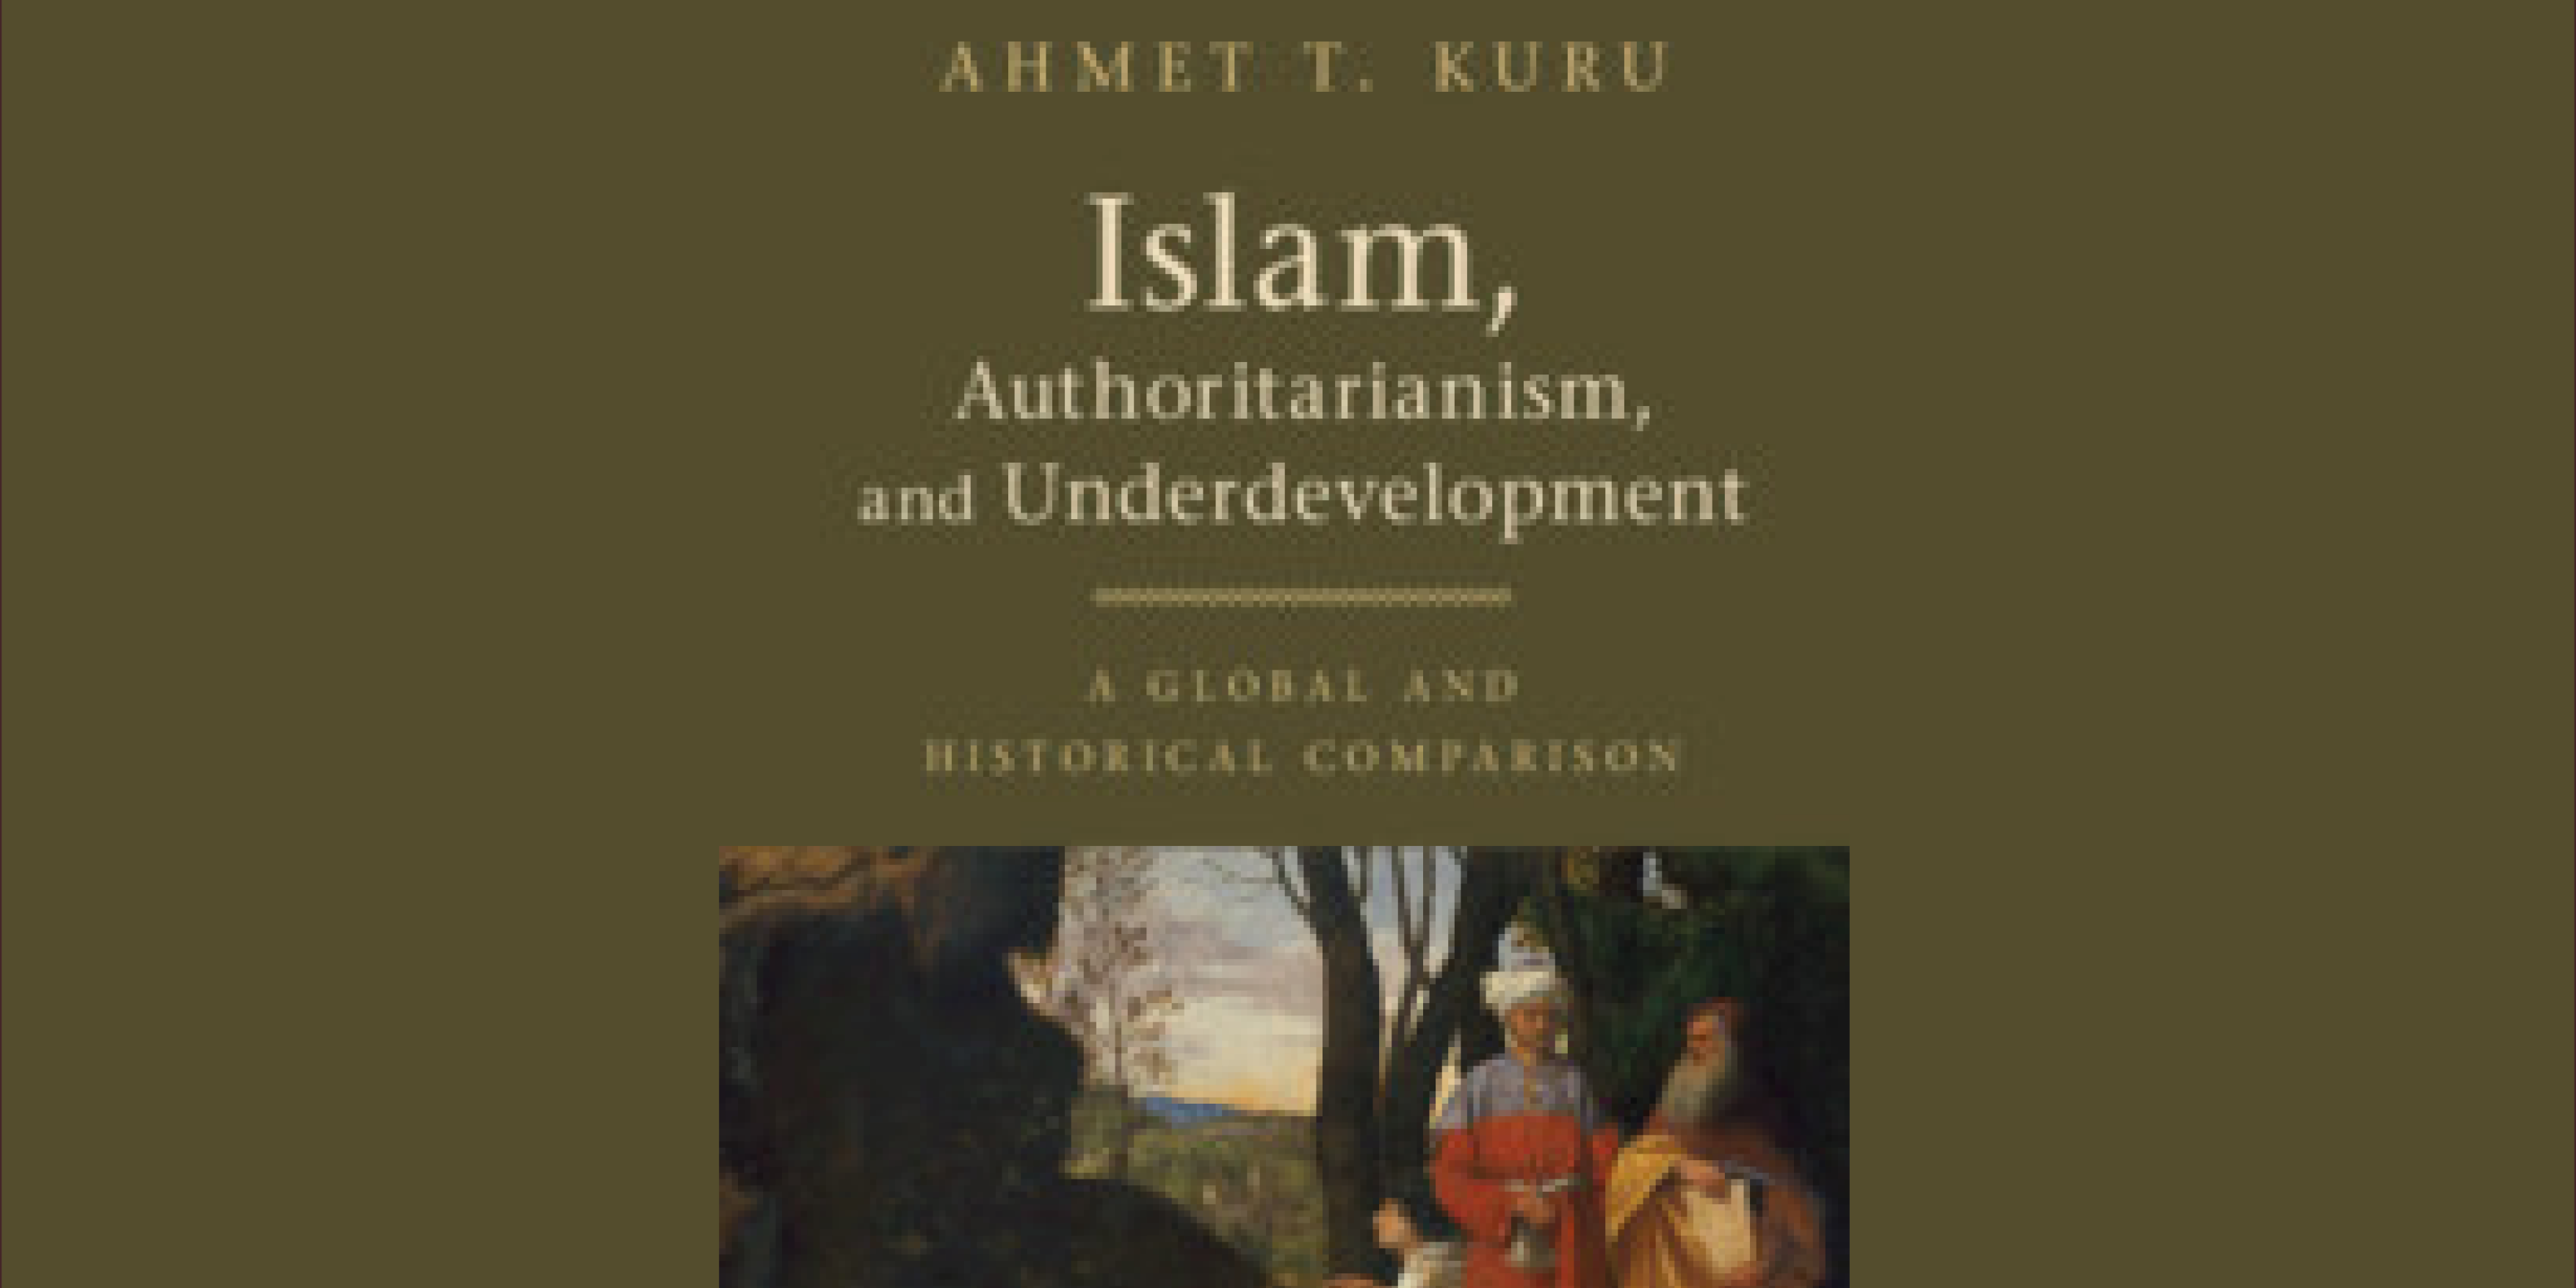 Buch Islam _authoritarianism _and Underdevelopment 1